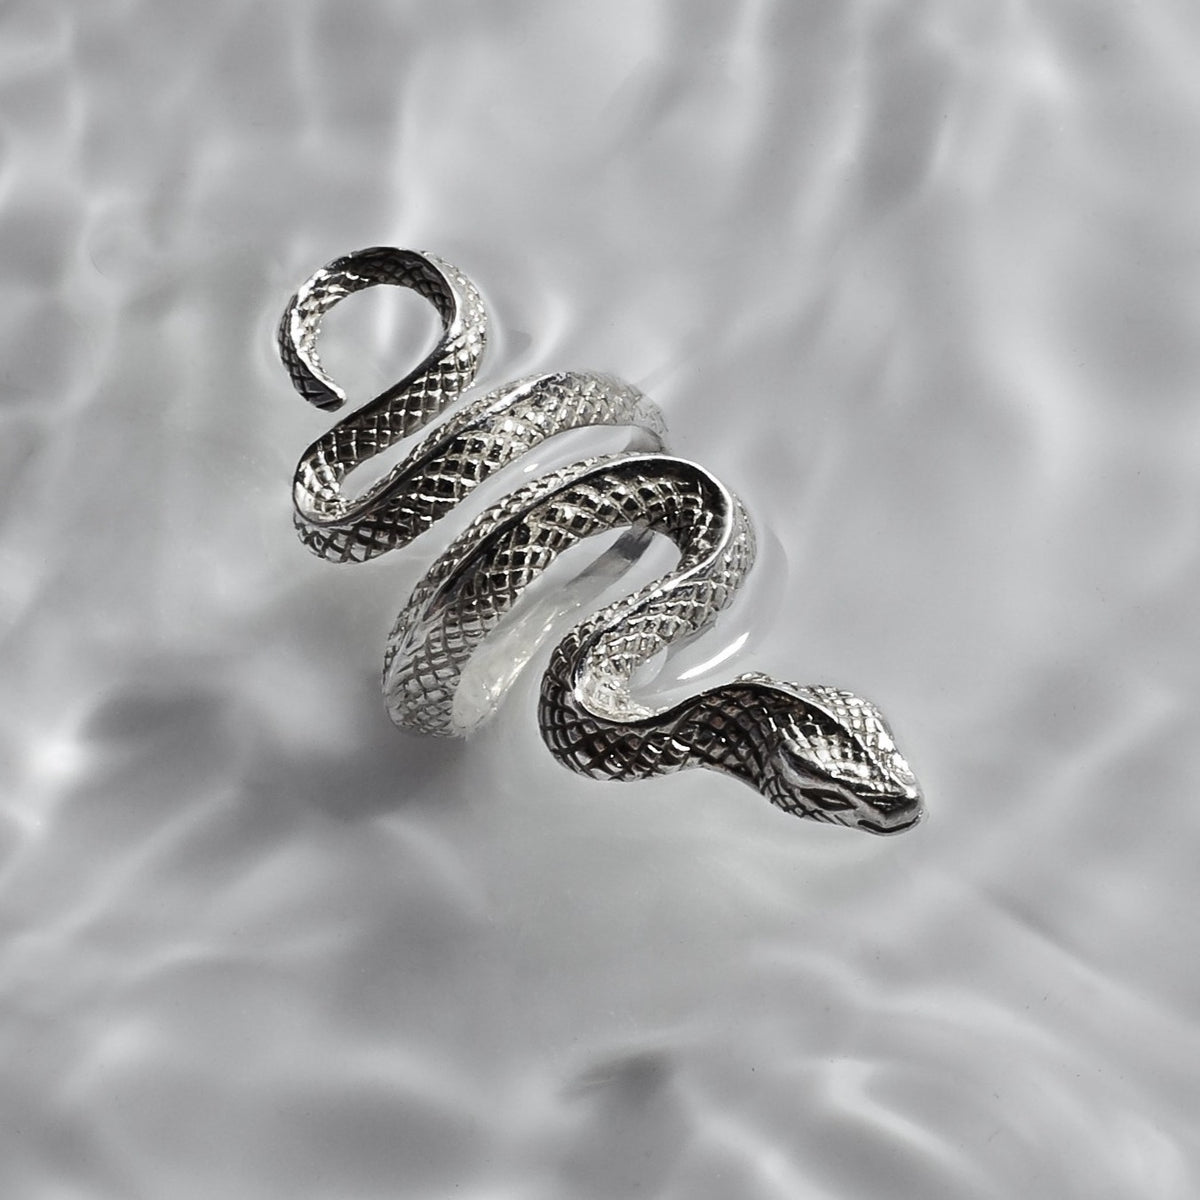 VIKA jewels Schlange Snake ring recycled sterling silver silber handmade handgemacht bali